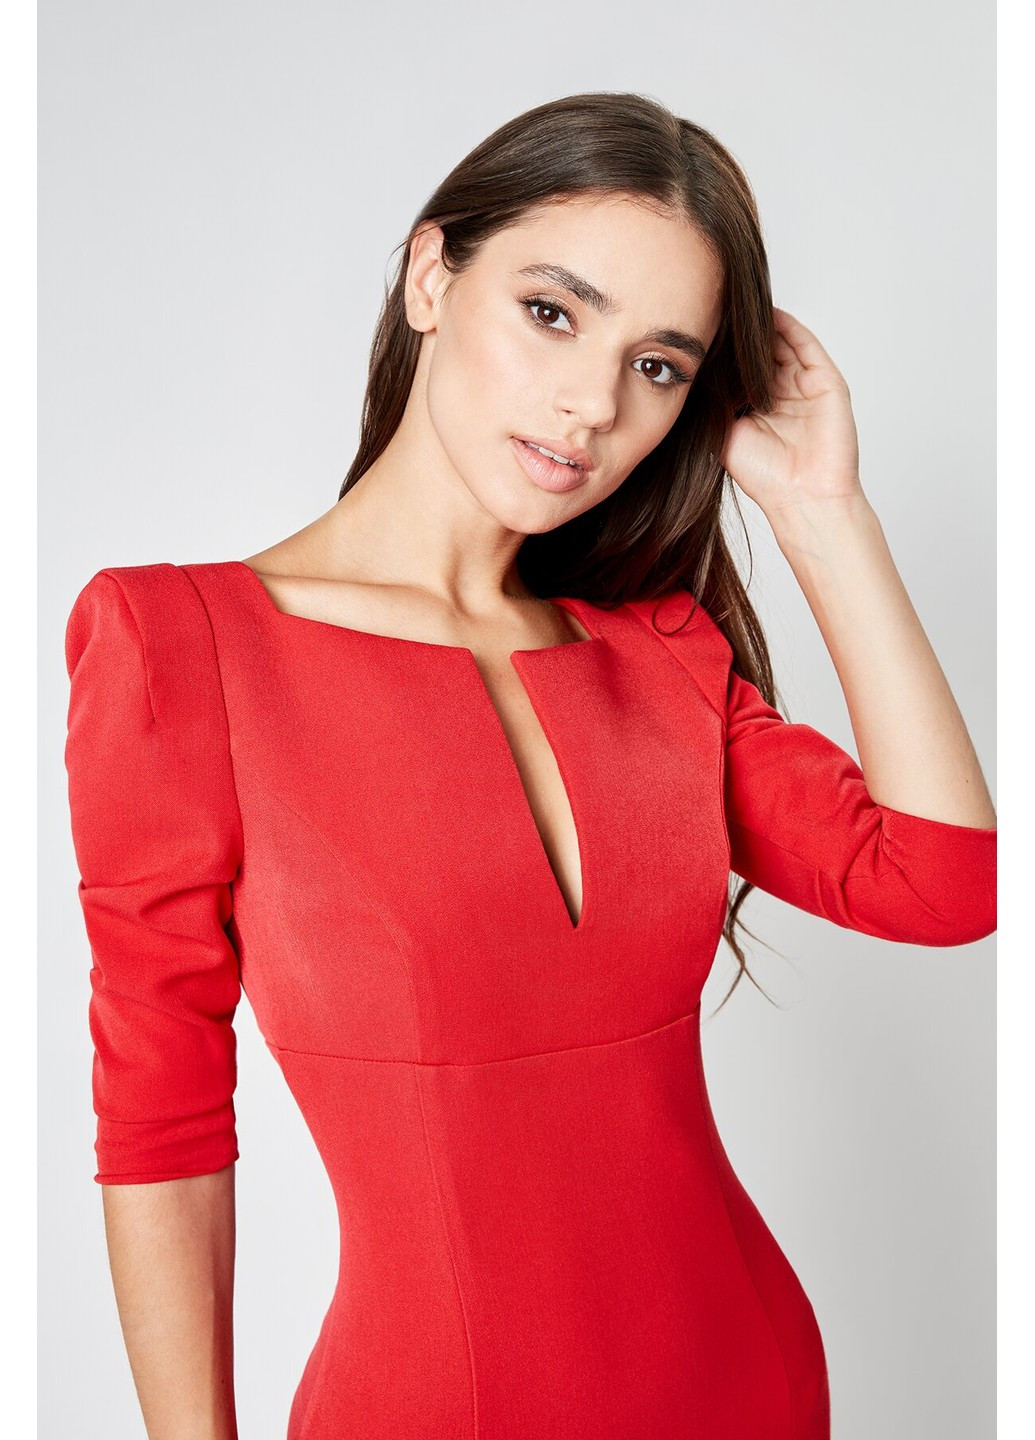 Красное деловое платье - футляр грета футляр BYURSE однотонное